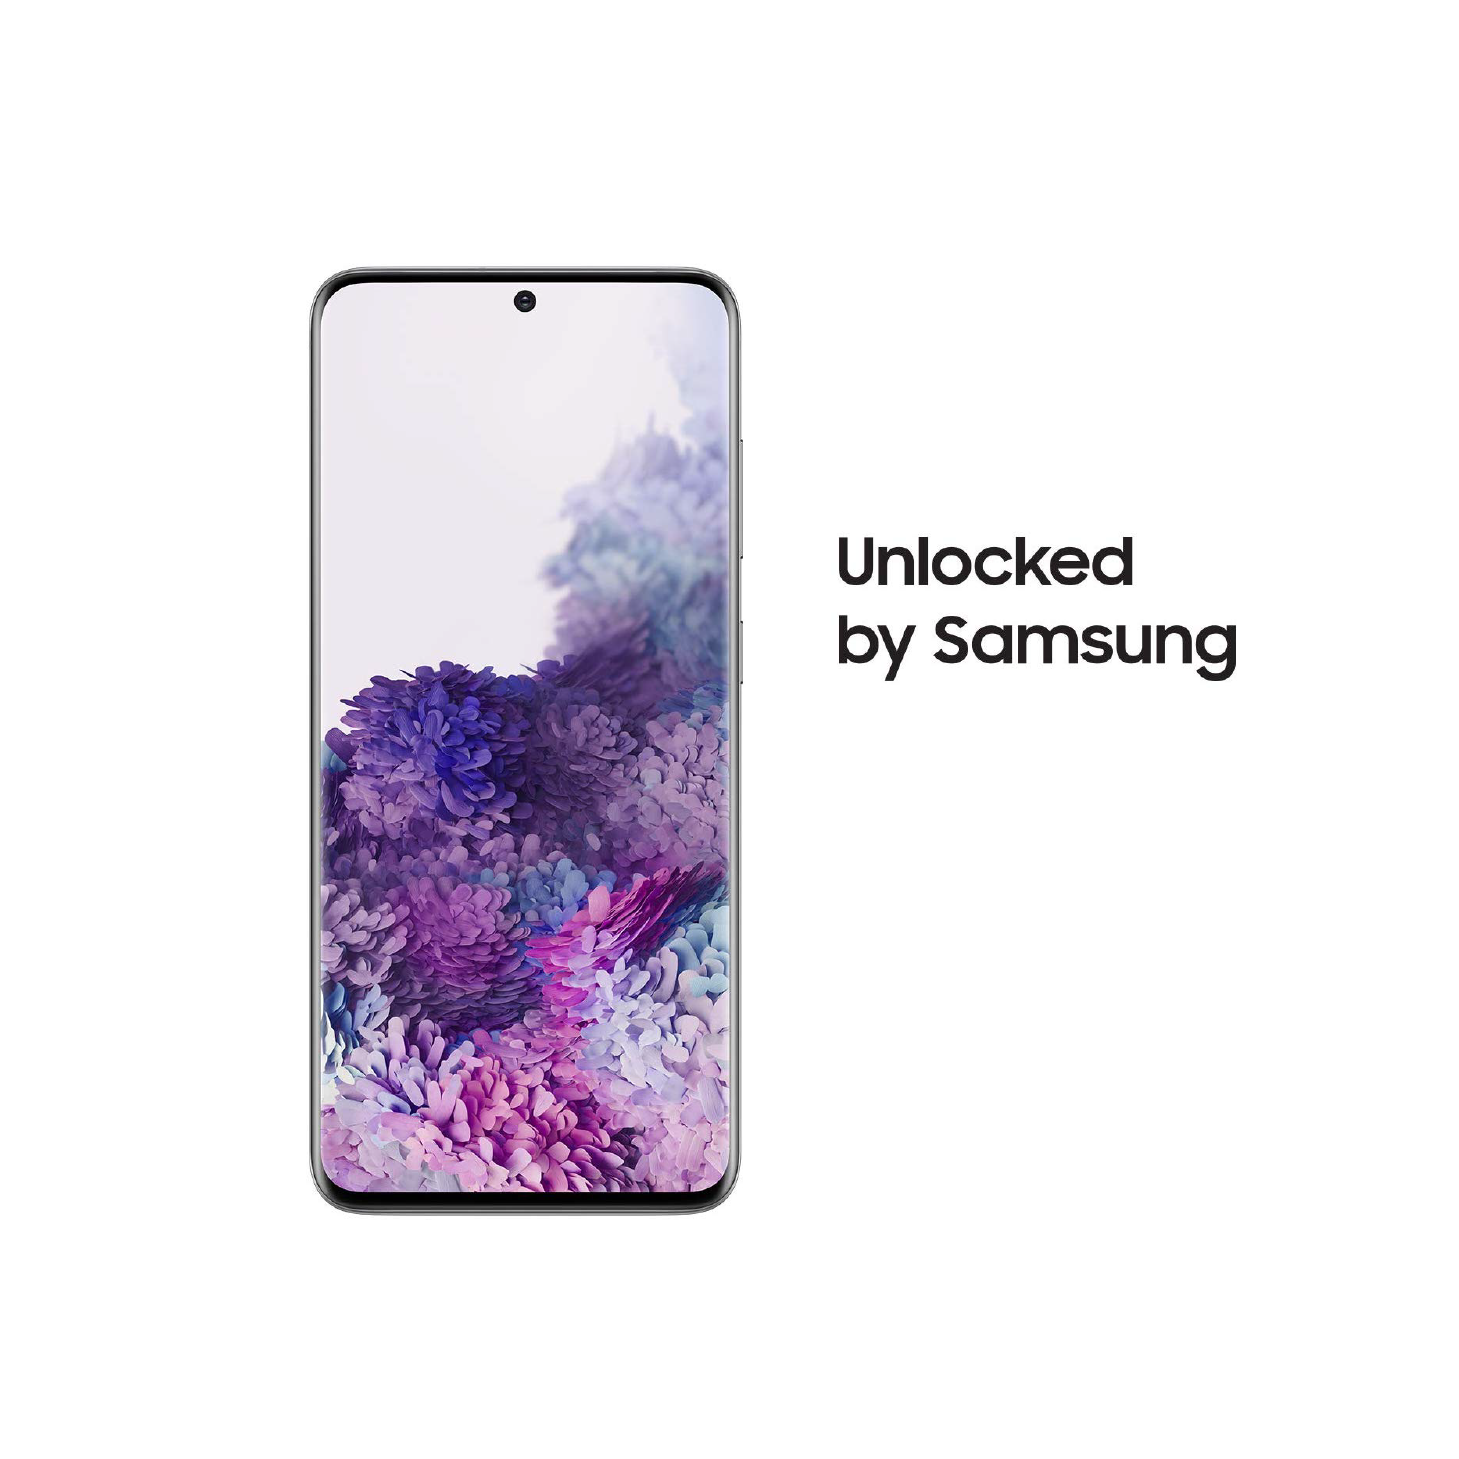 Samsung Galaxy S20 Ultra -  Factory Unlocked